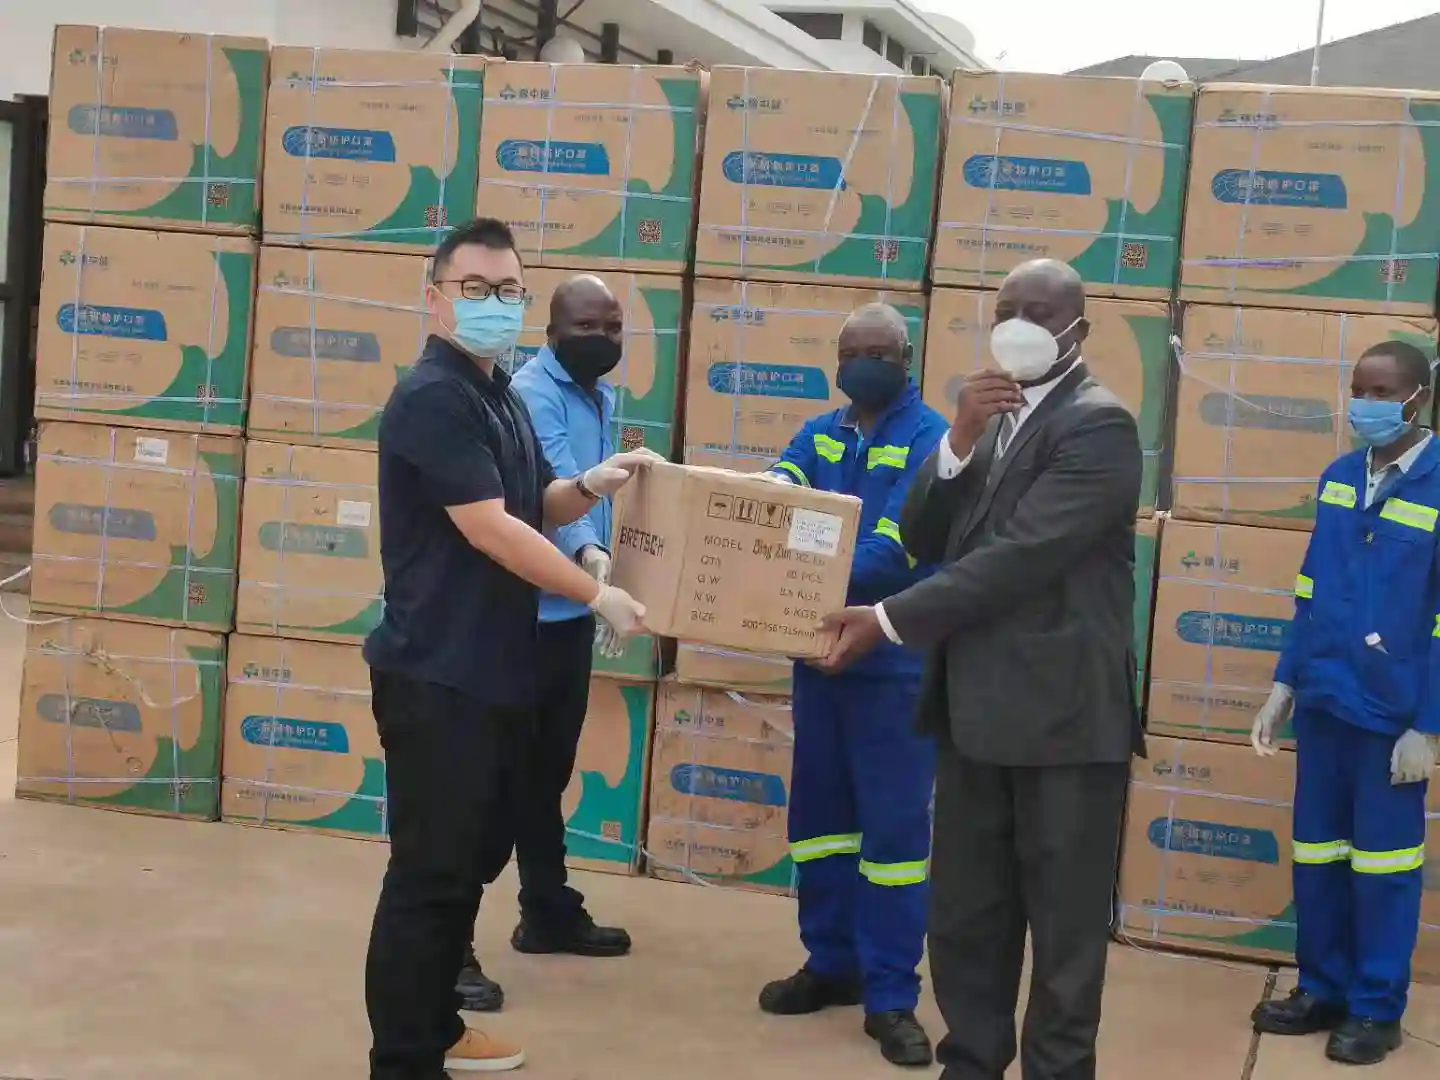 China Donates PPE To Zimbabwe A Day After U.S. Availed 20 Ventilators